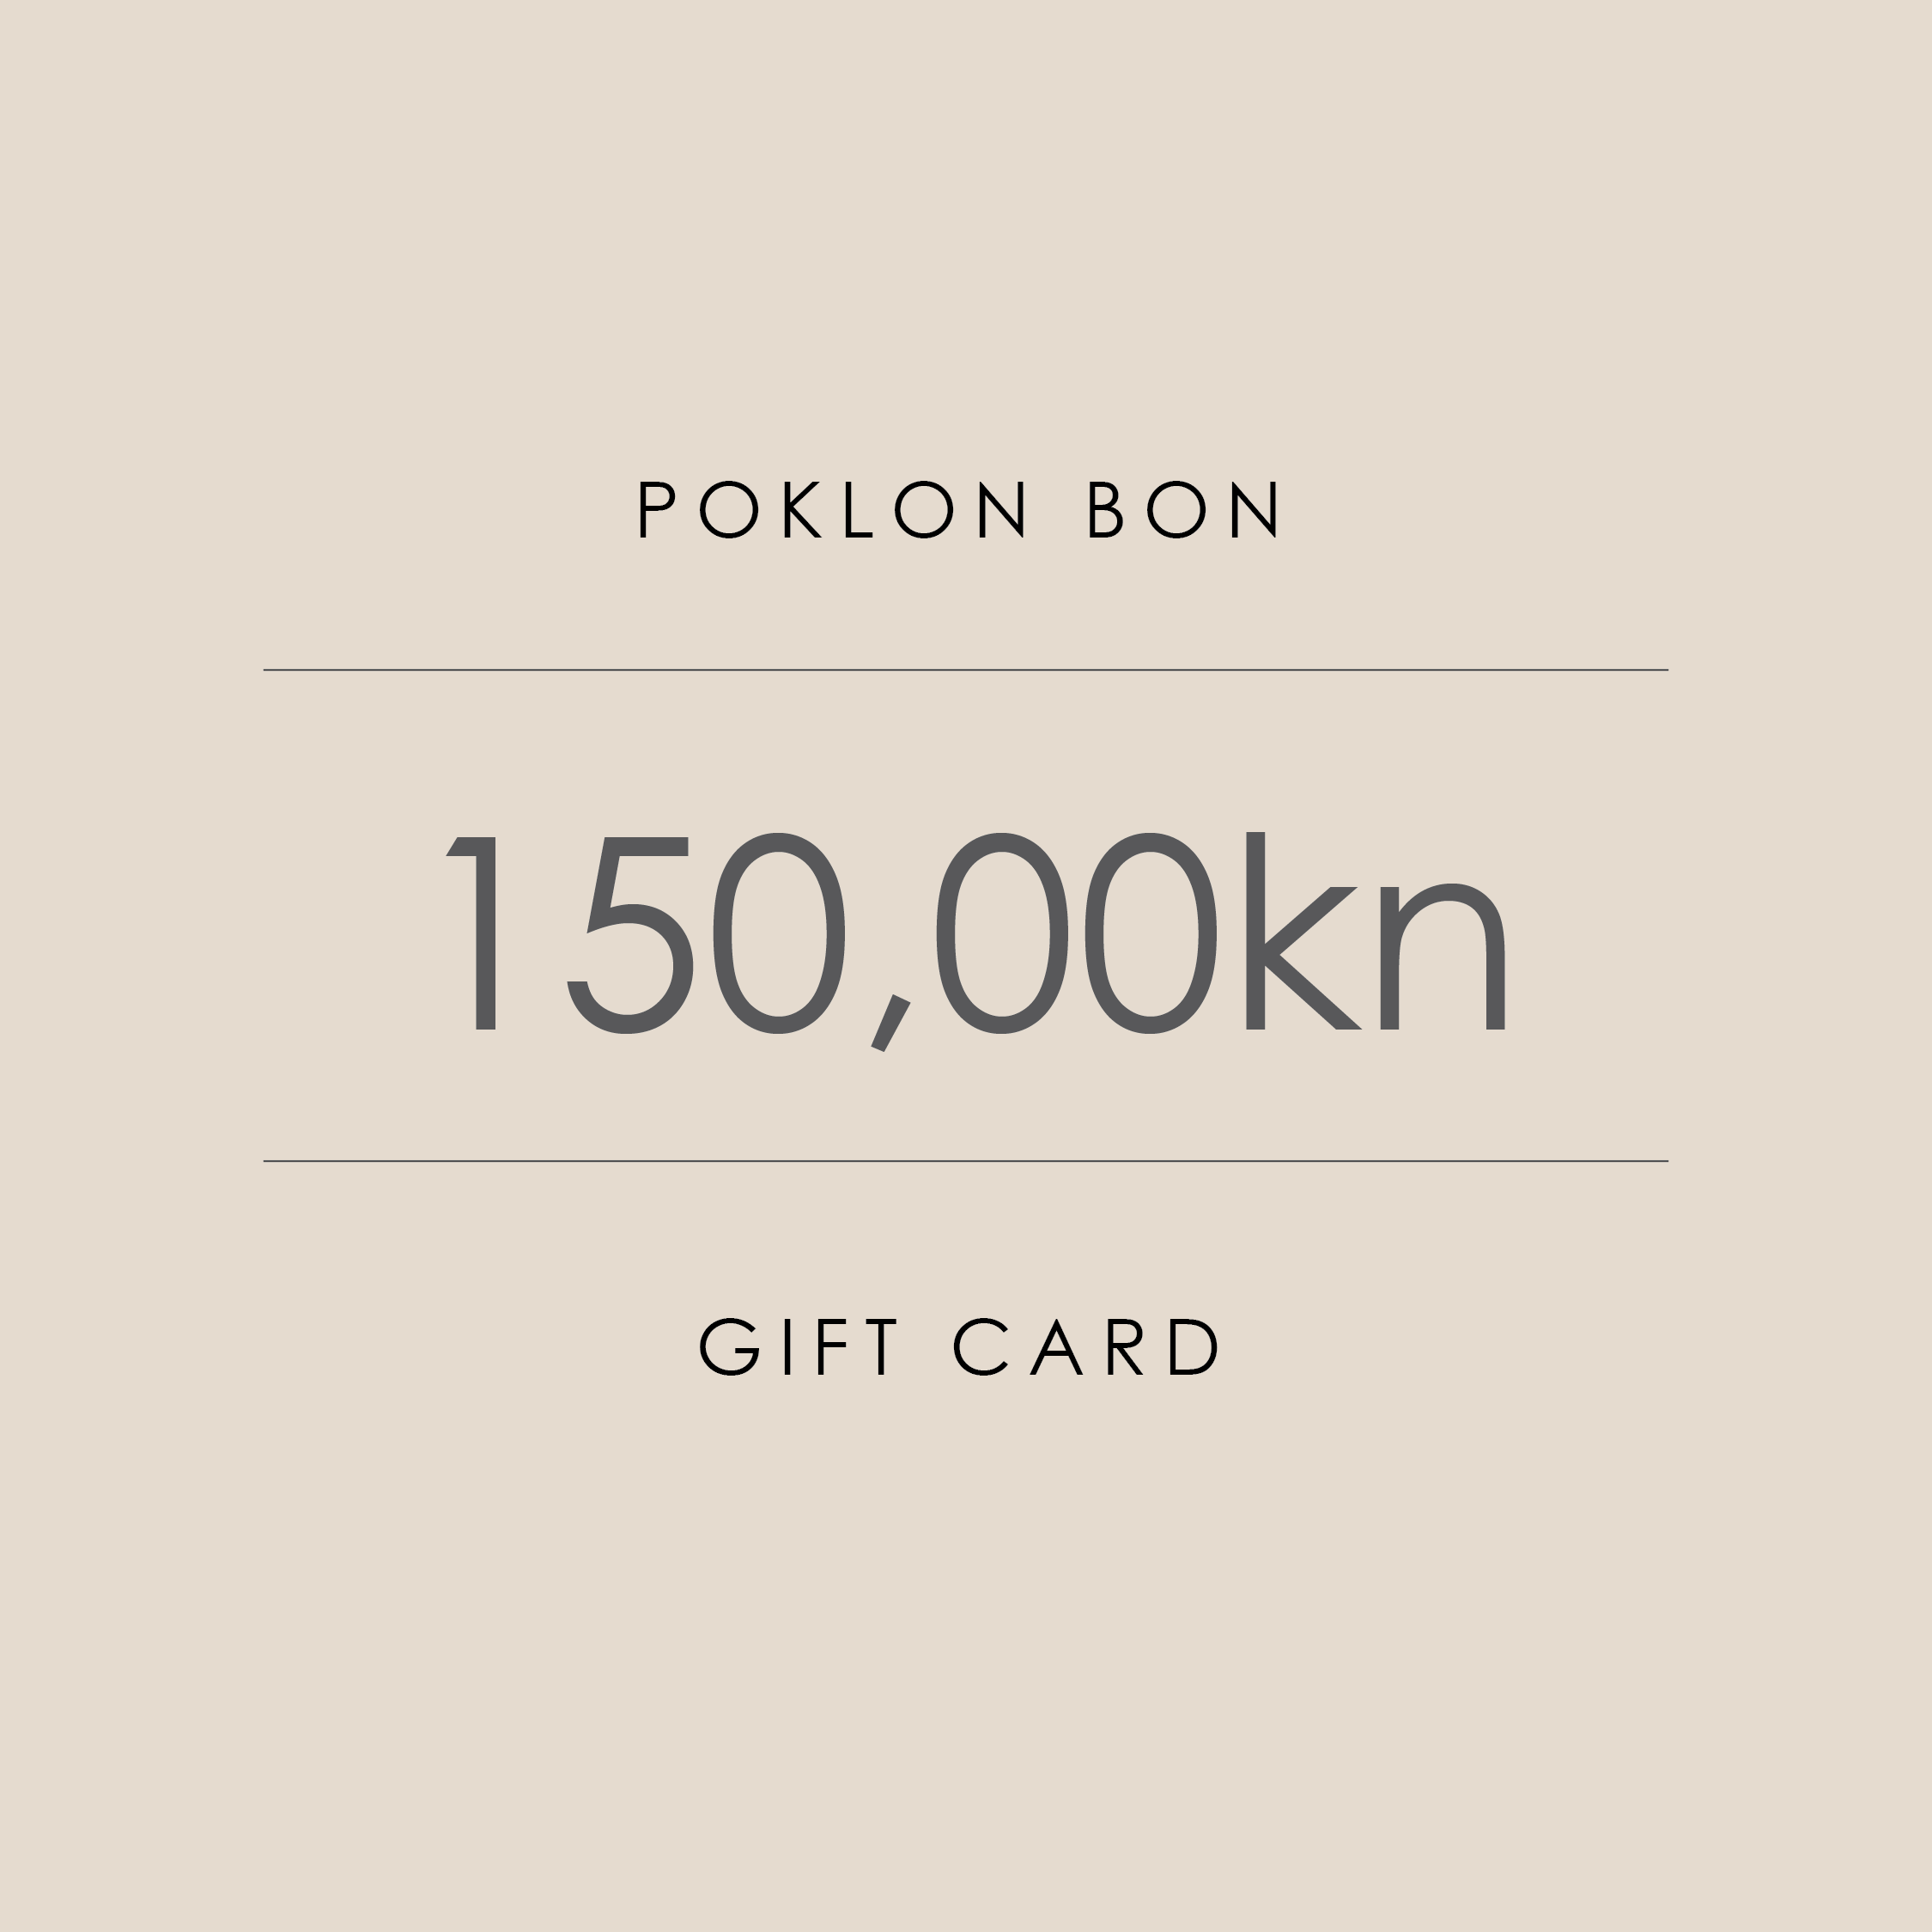 Gift Card | Poklon bon